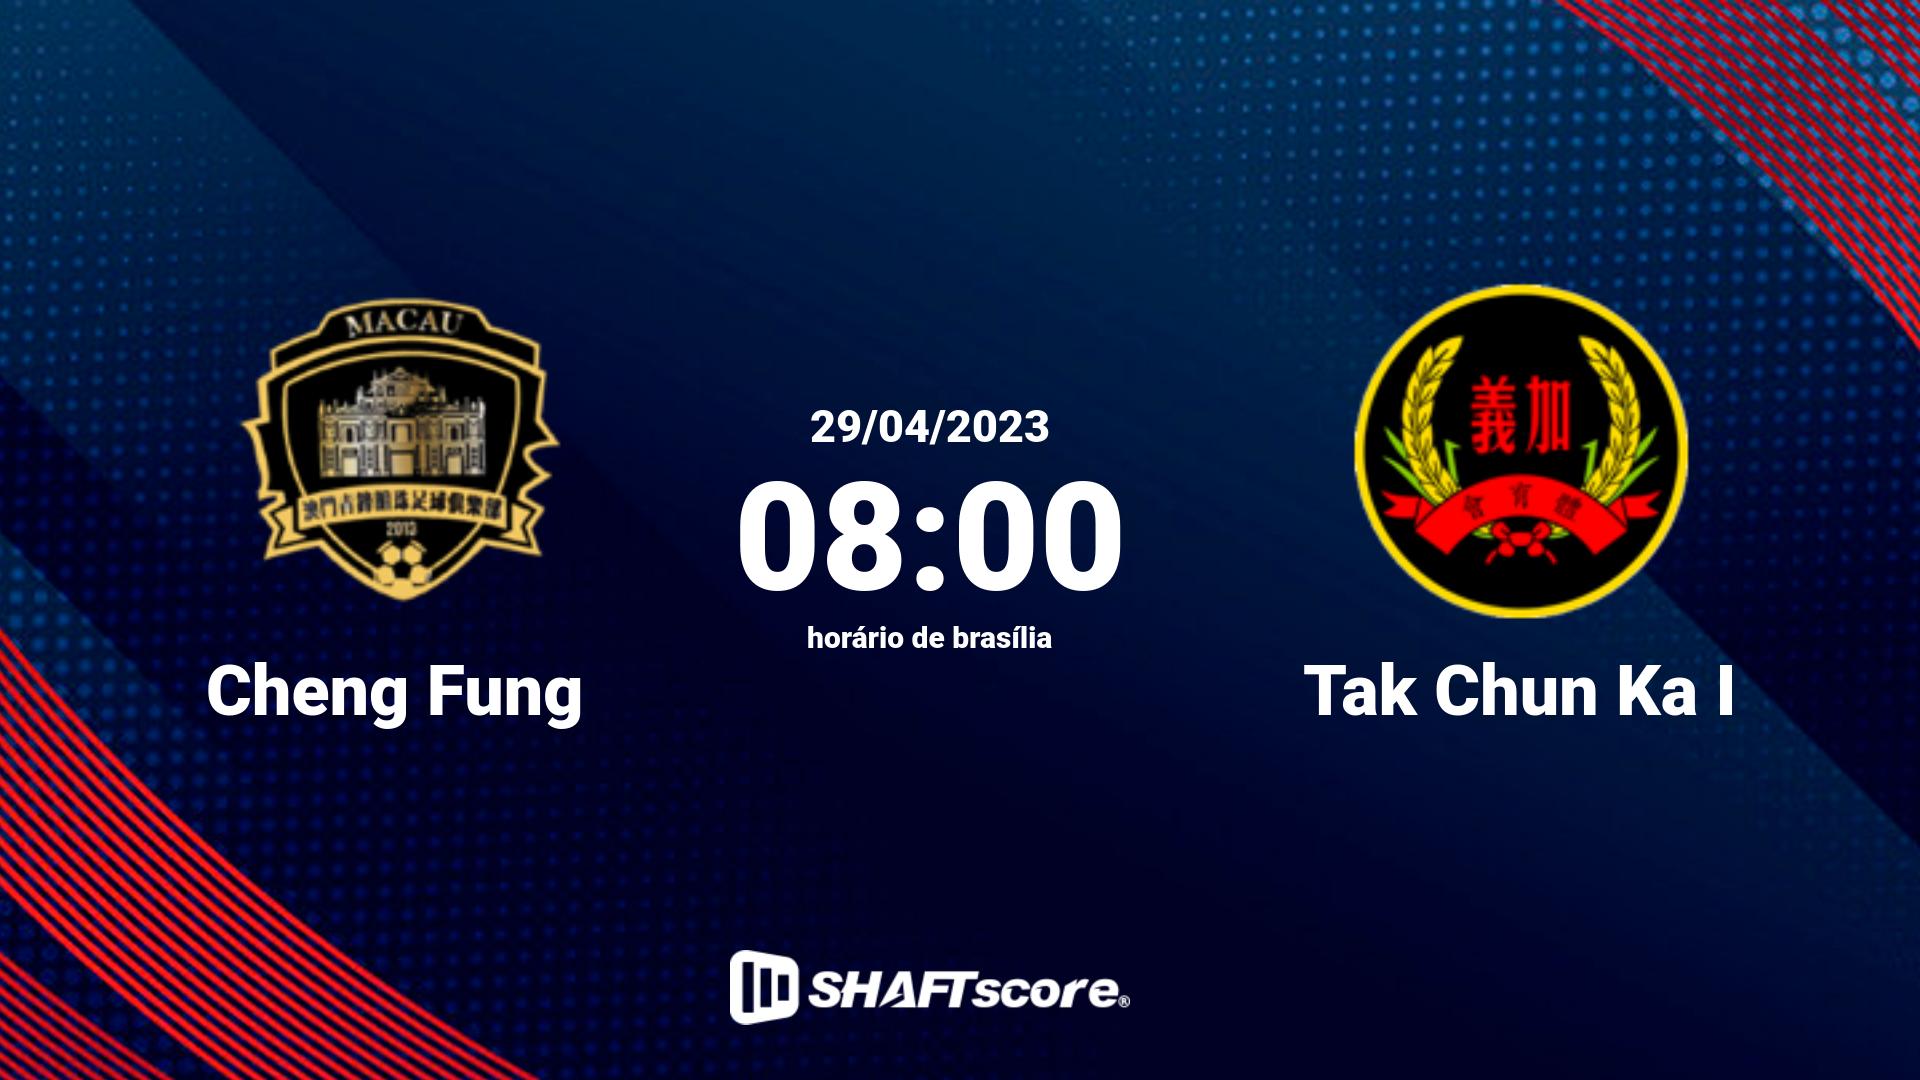 Estatísticas do jogo Cheng Fung vs Tak Chun Ka I 29.04 08:00